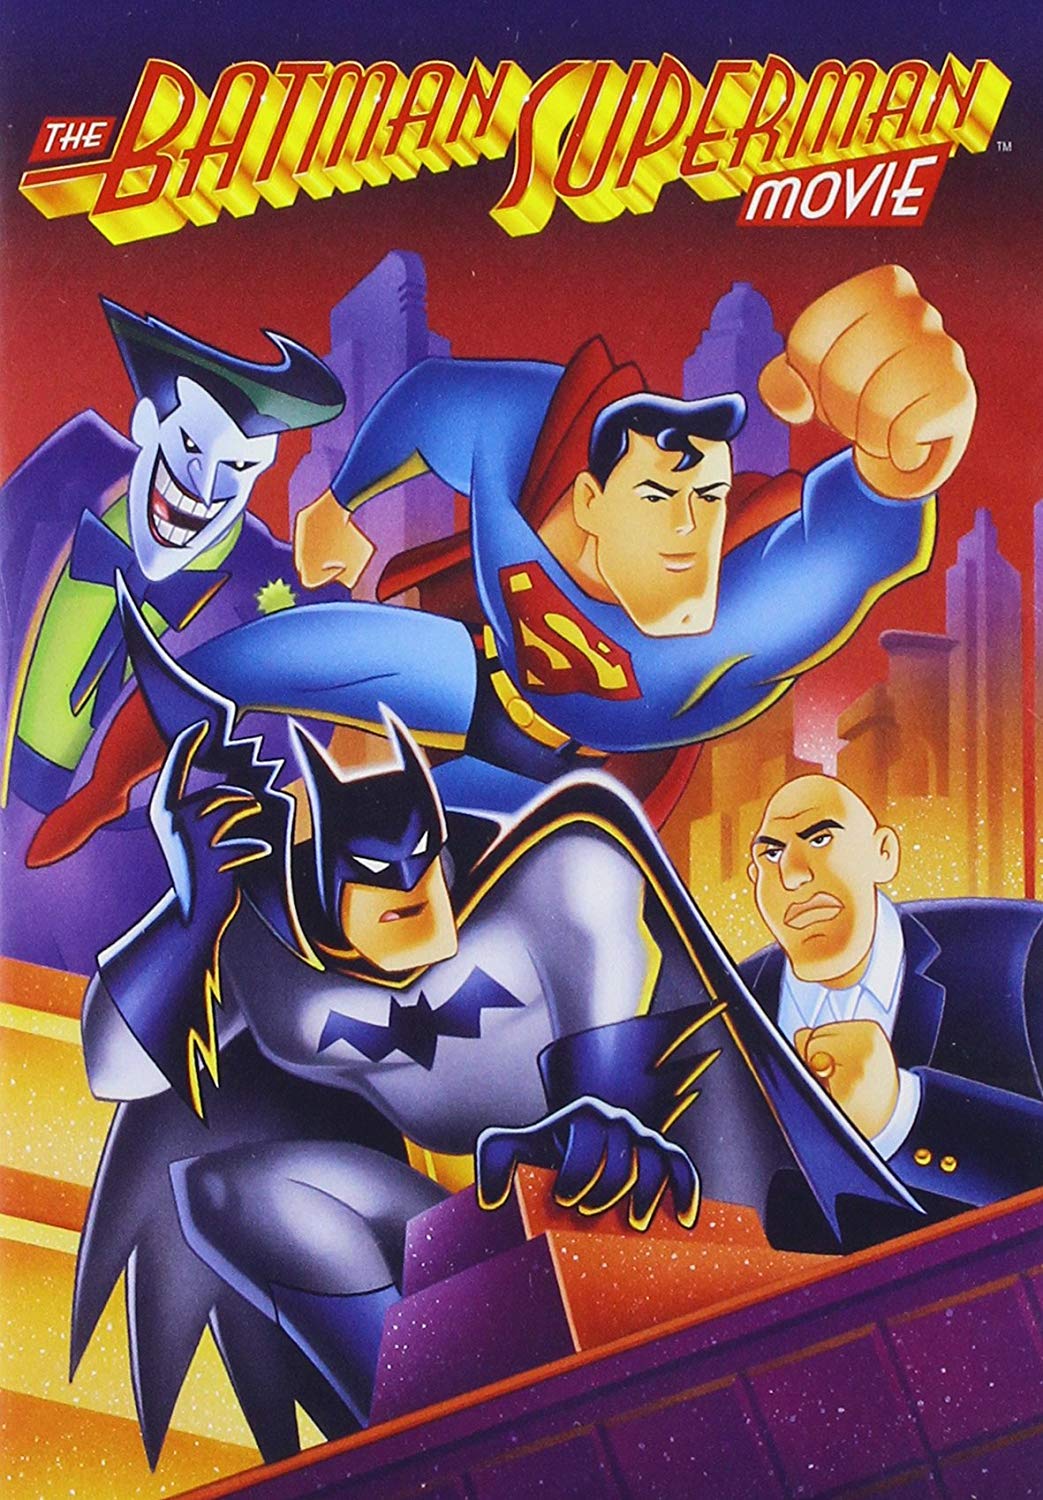 Batman Superman Movie - DVD